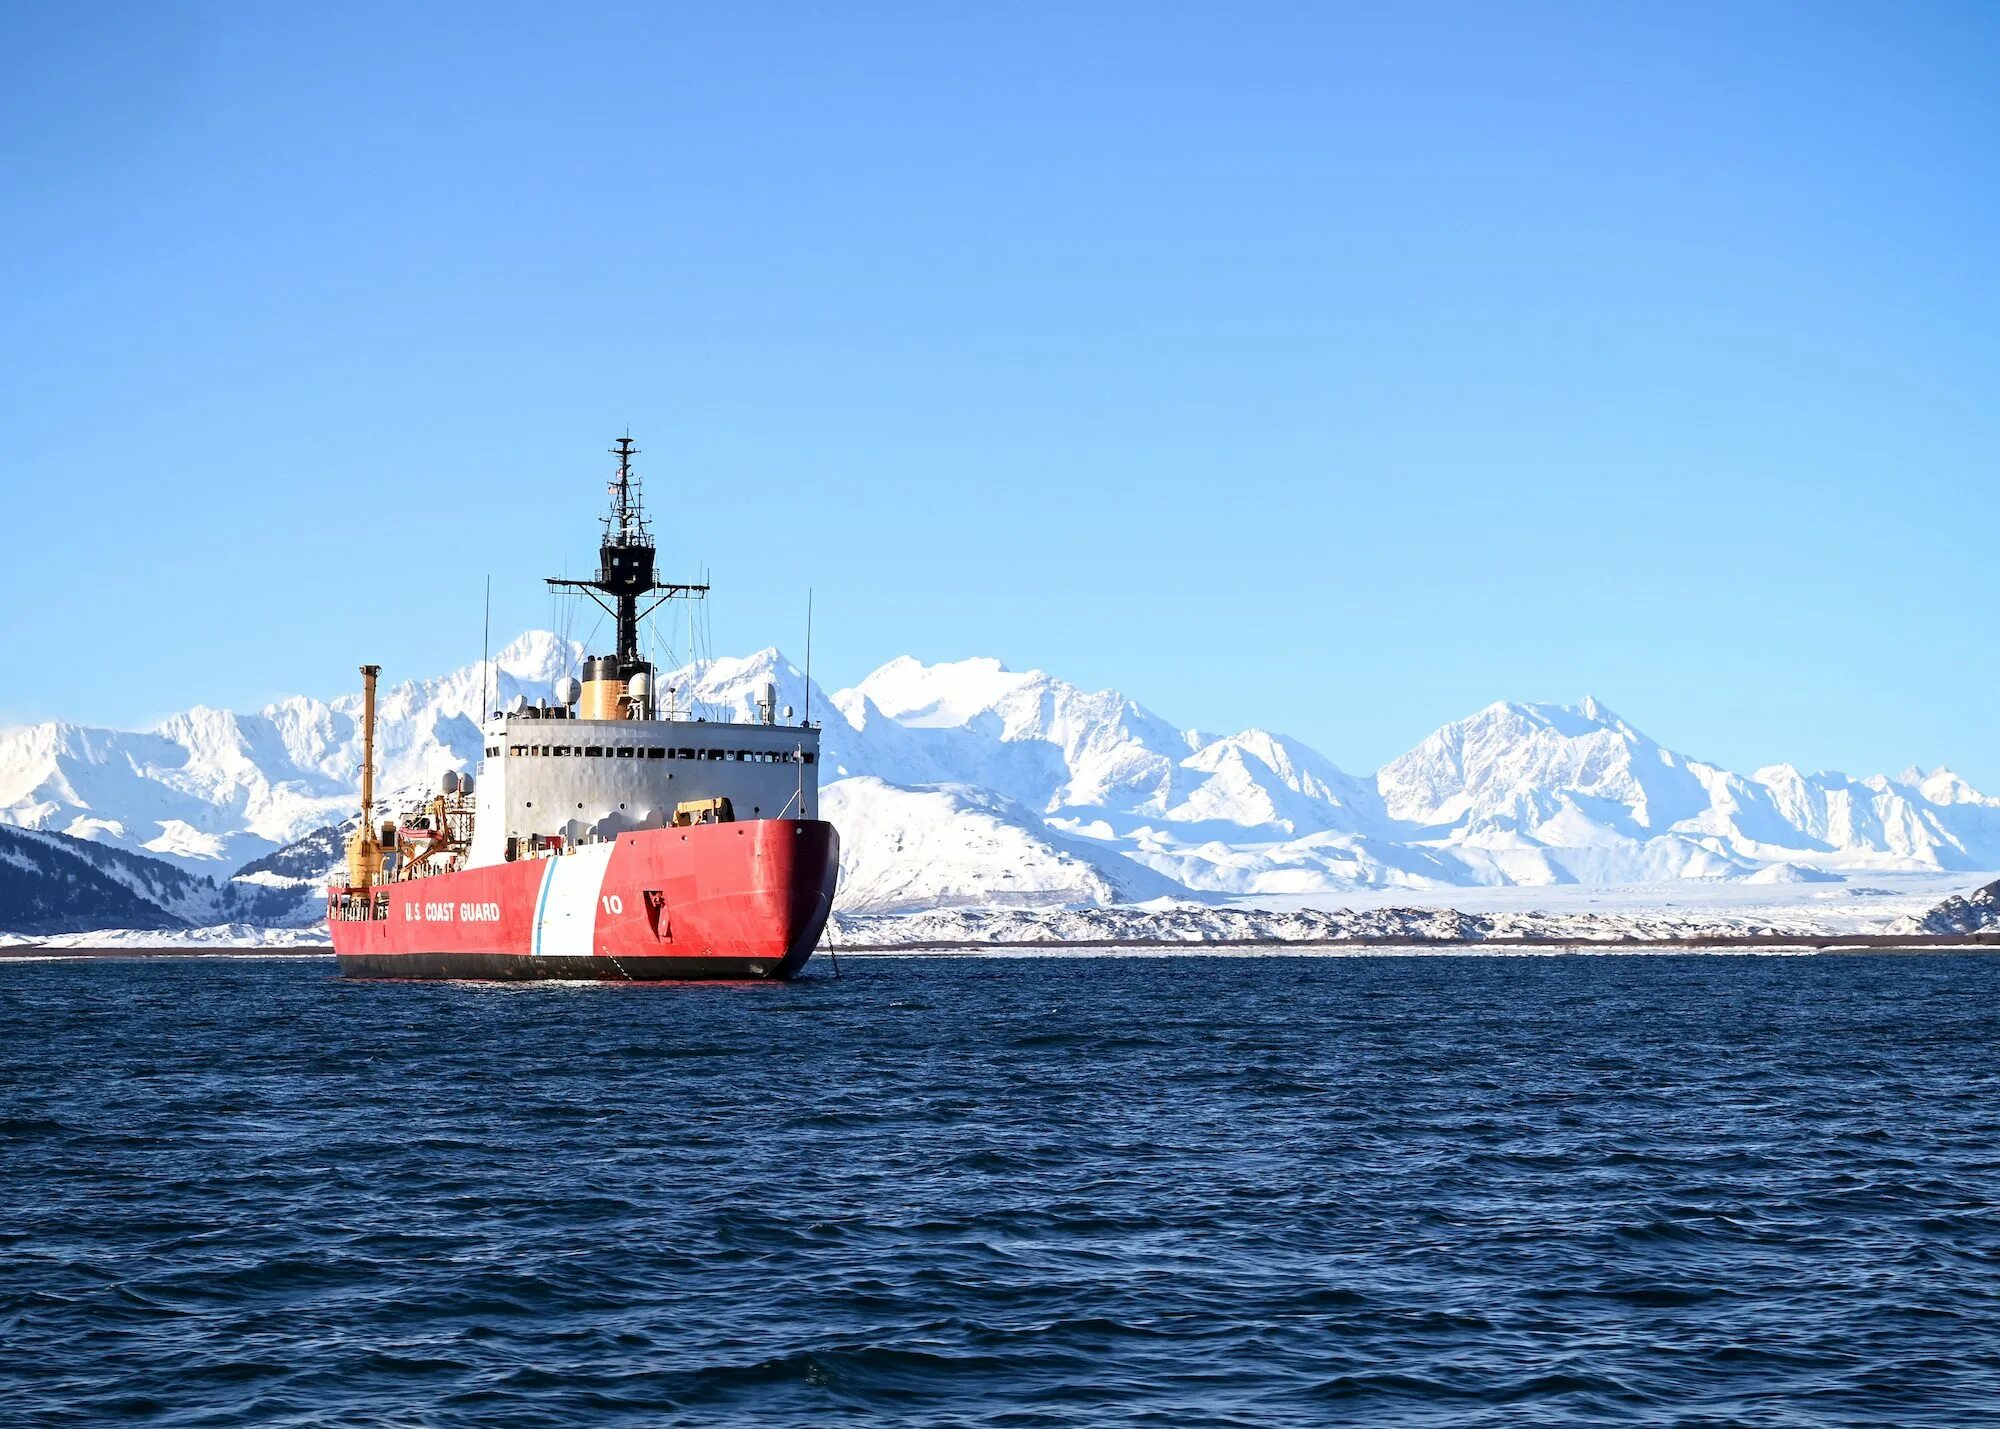 USCGC Polar Star. Ледокол Аляска. Arctic Polar Icebreaker. Ледоколы России. Polar star